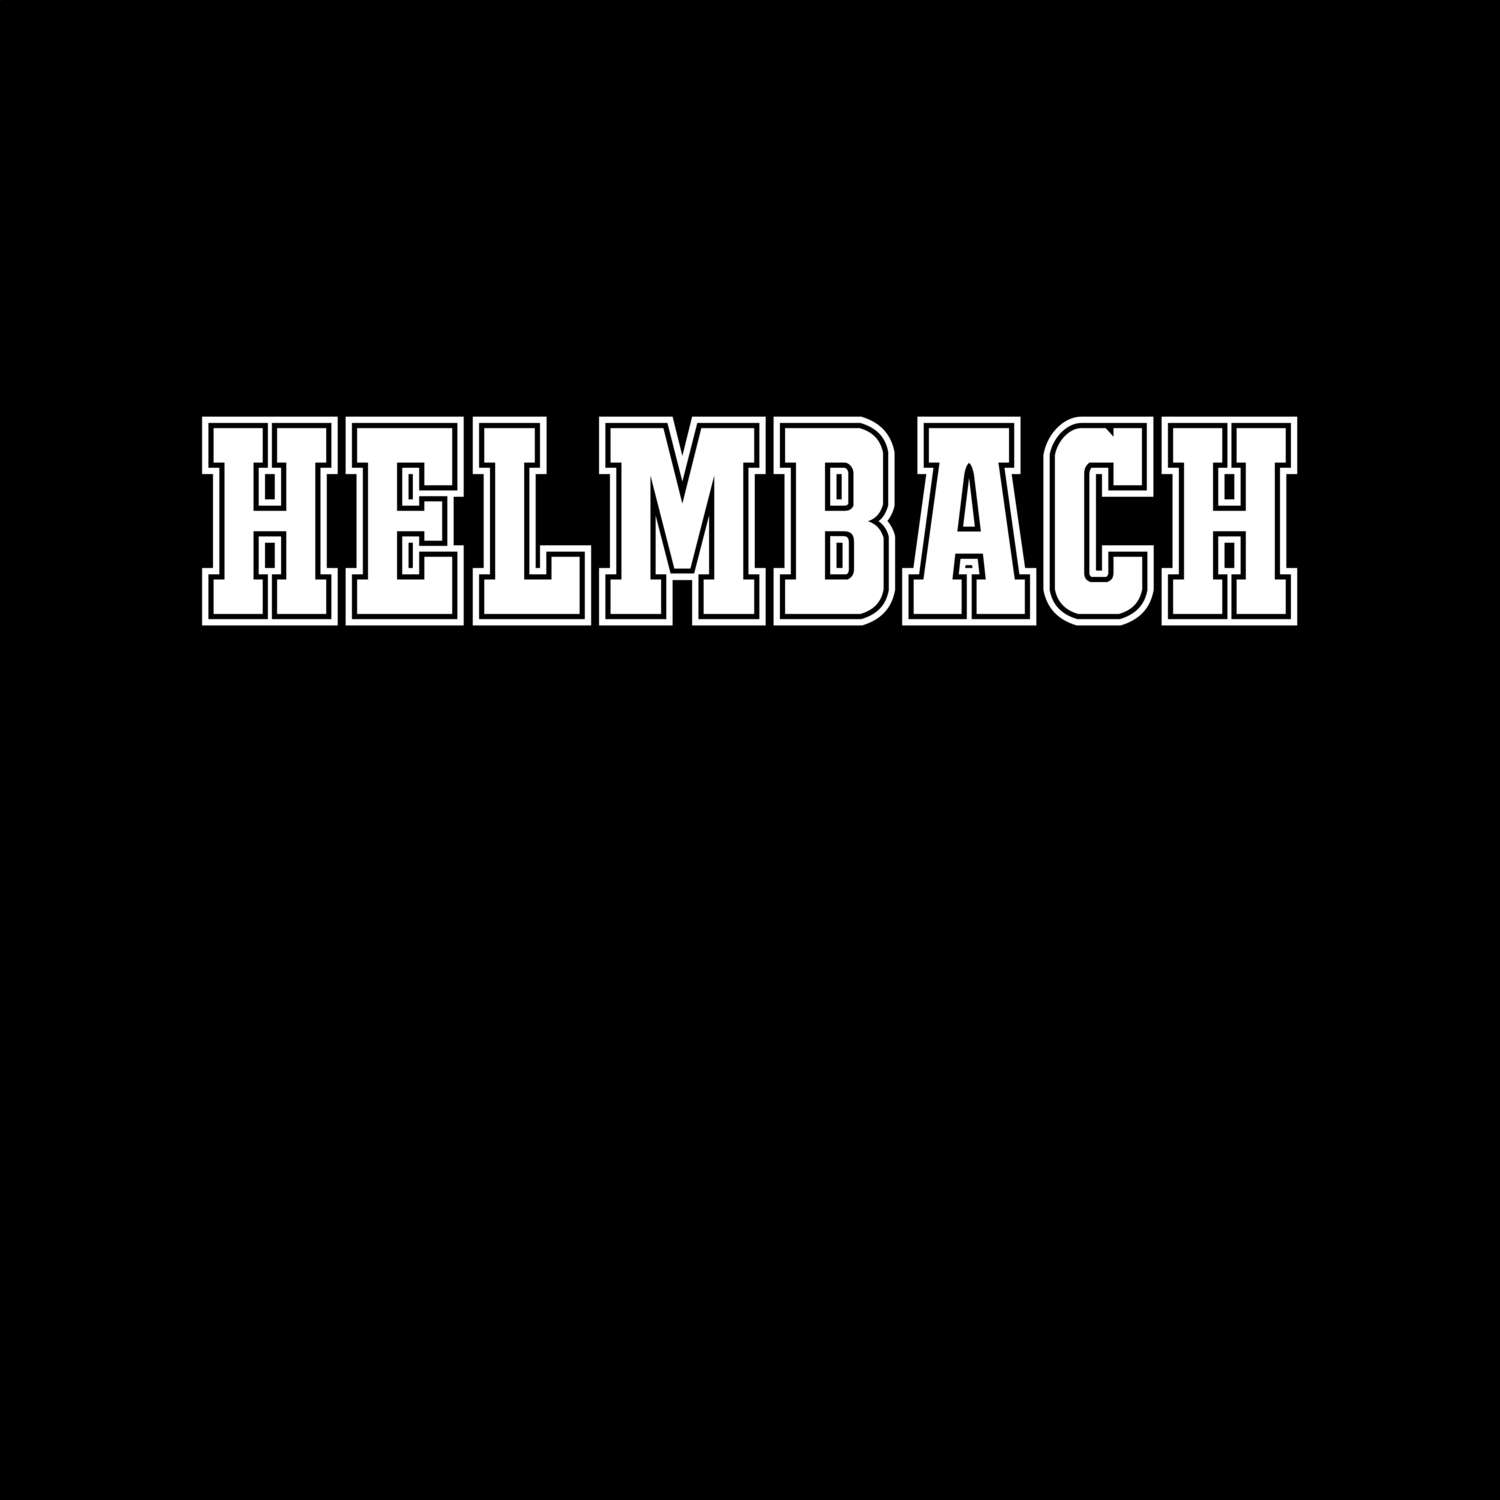 Helmbach T-Shirt »Classic«